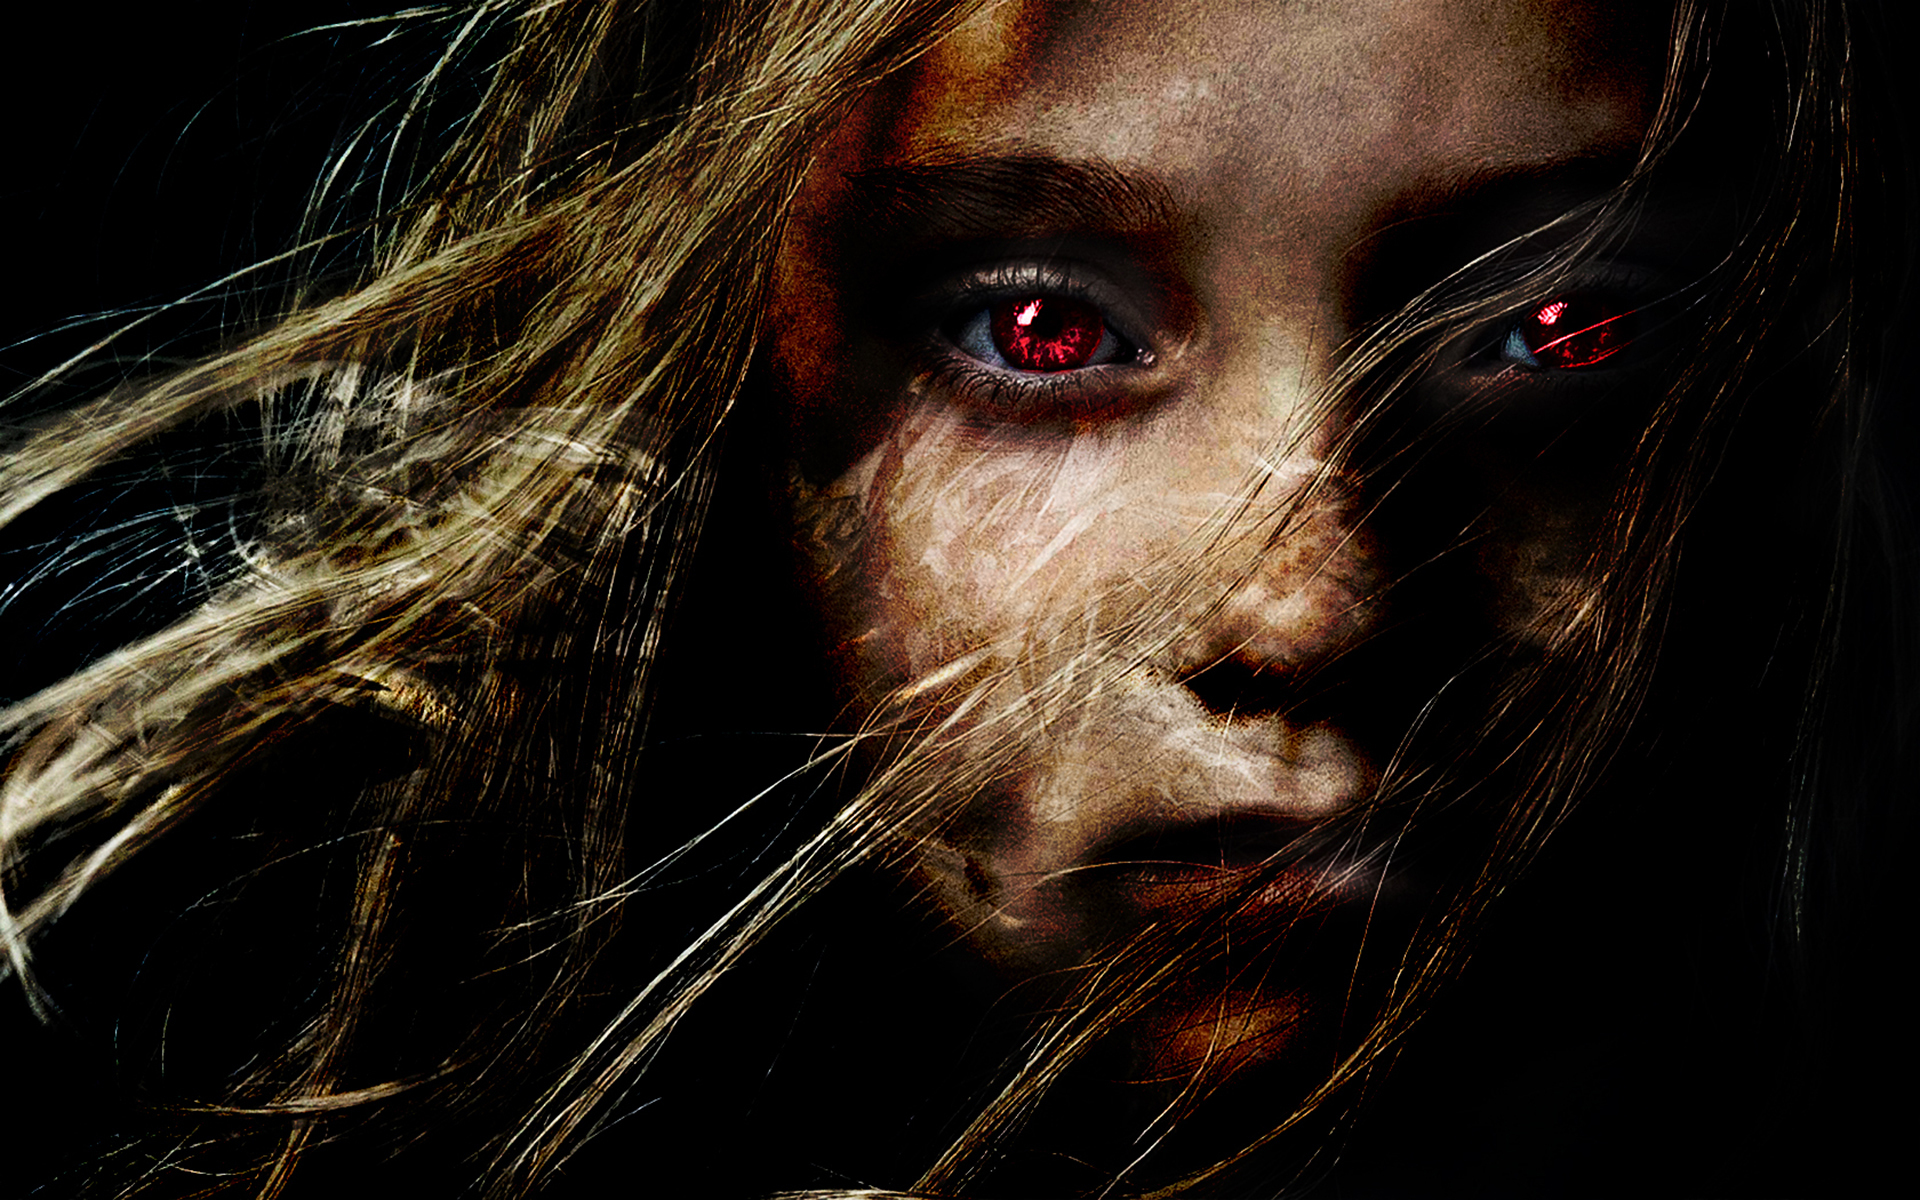 Dark Gothic Horror Scary Creepy Spooky Demon Evil Face Blonde Women